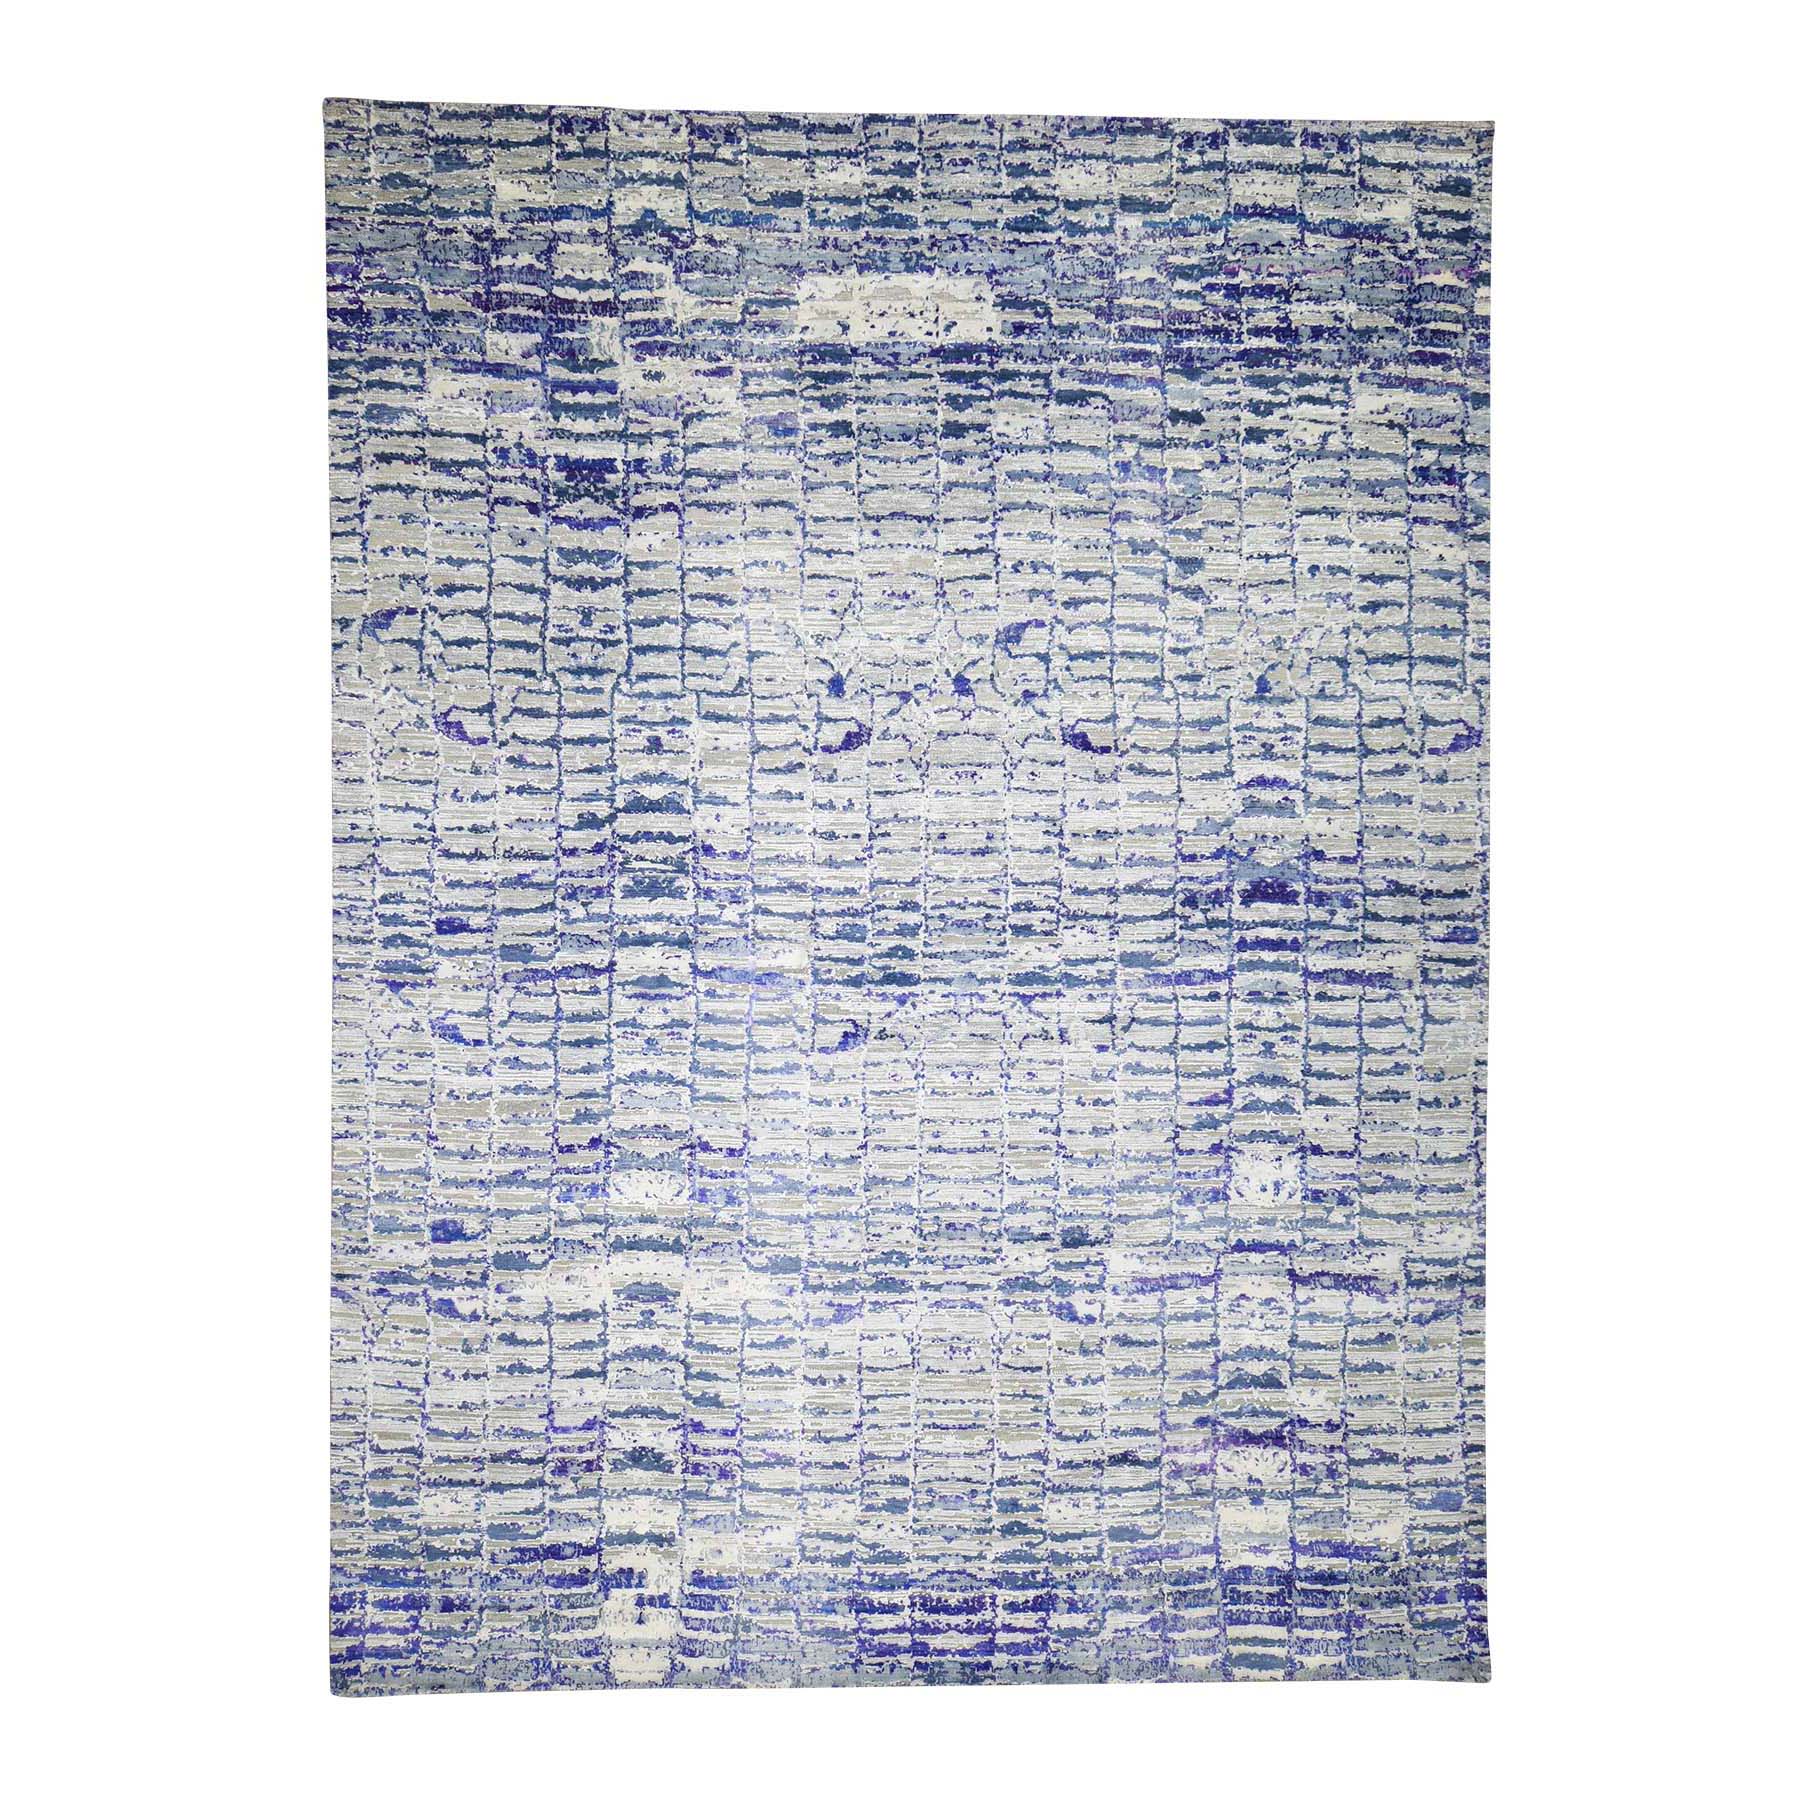 9'x12'2" Sari Silk Diminishing Bricks Hand Woven Oriental Rug 